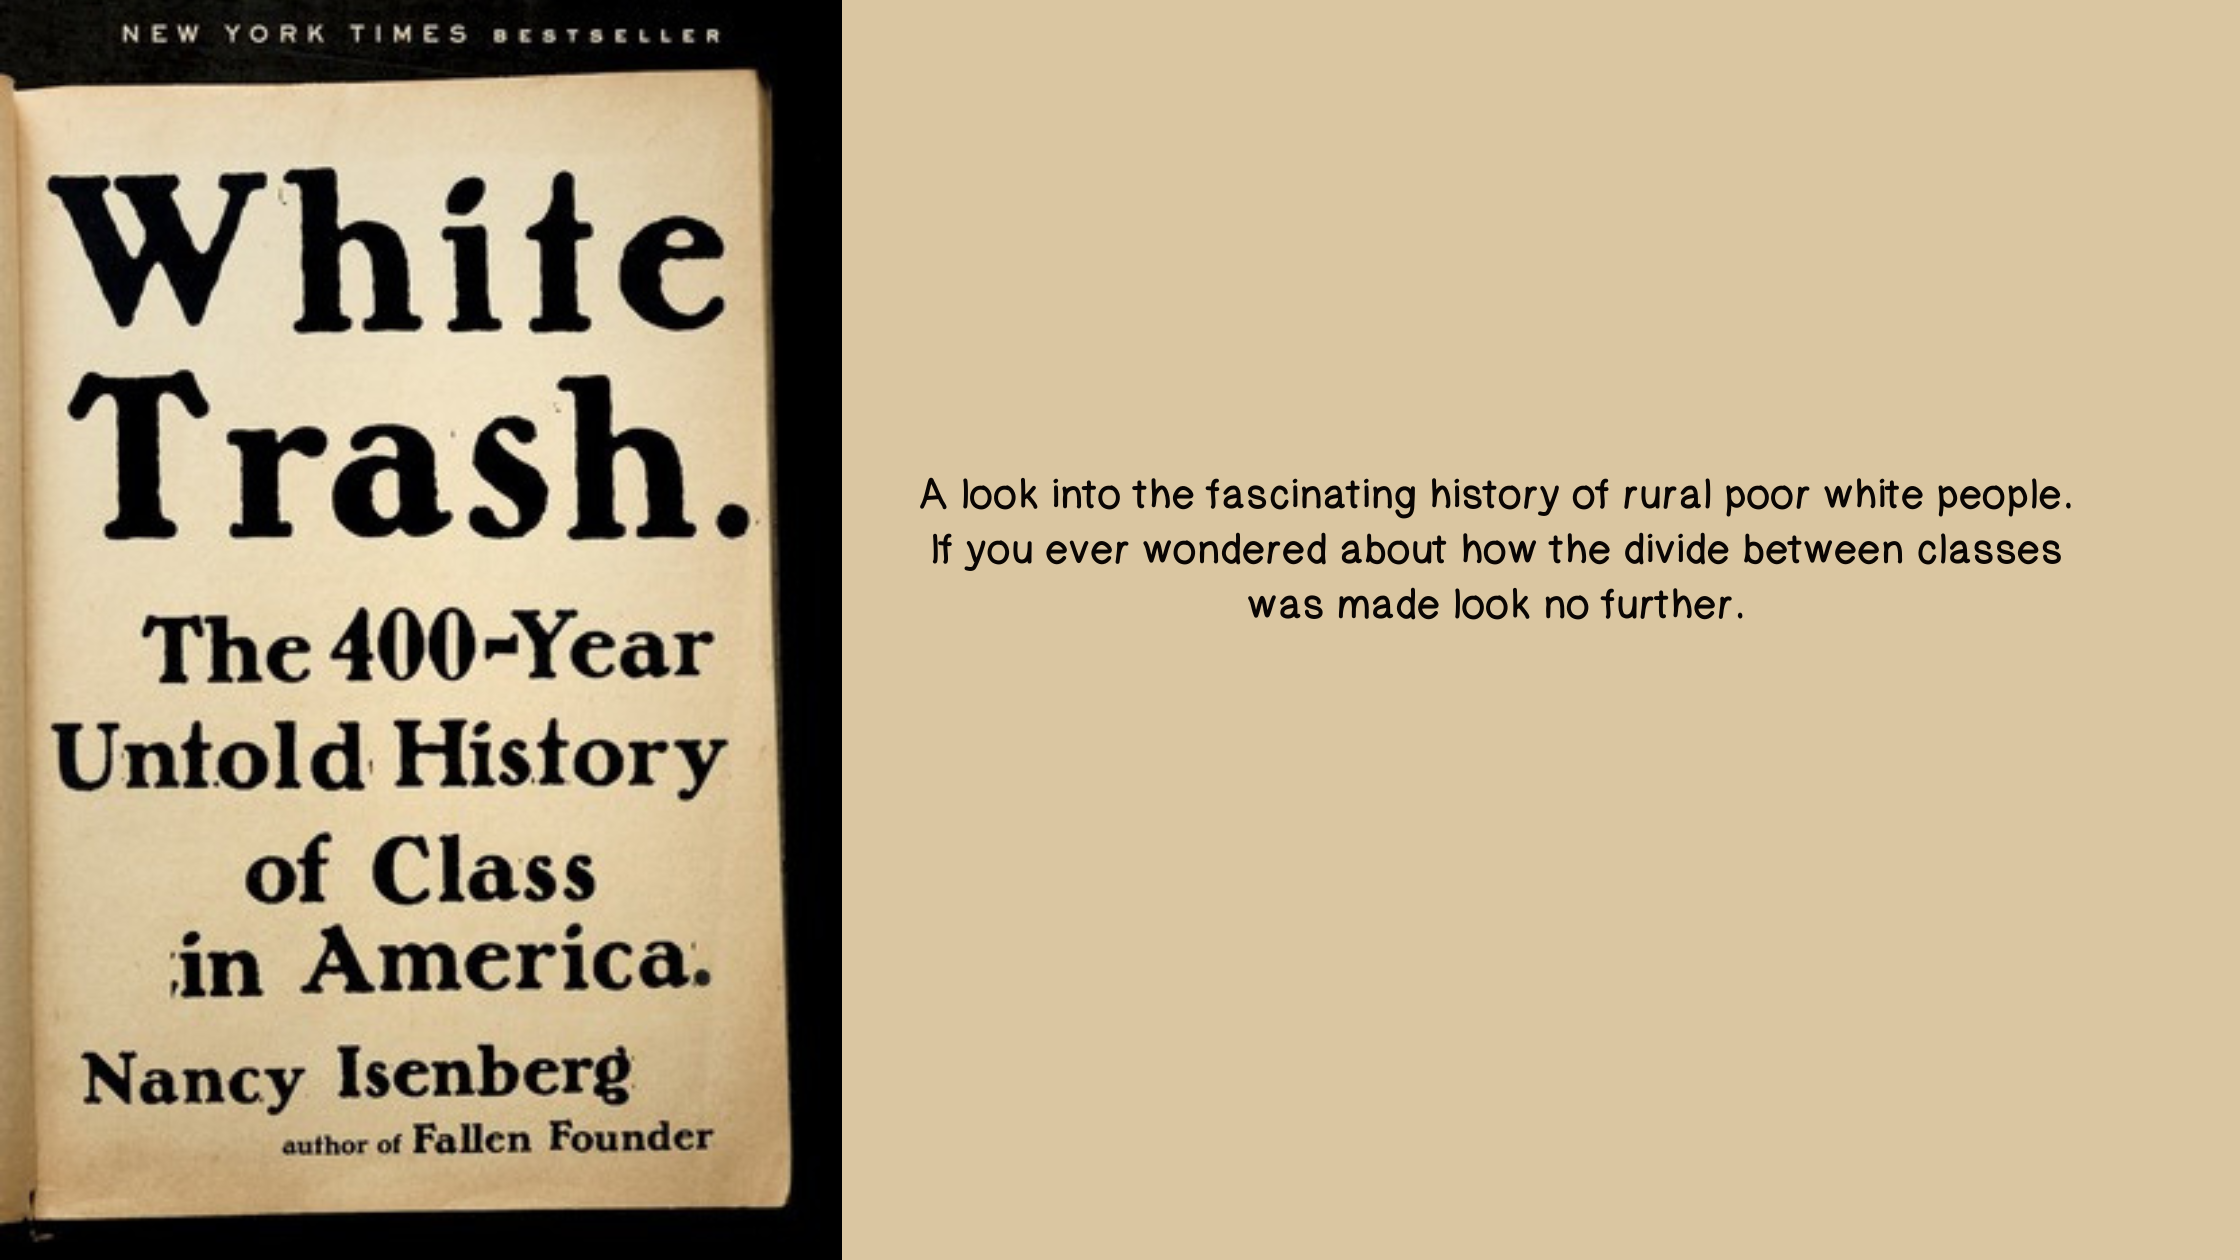 The history of White Trash from Nancy Isenberg book WHITE TRASH: The  400-Year Untold History of Class in America